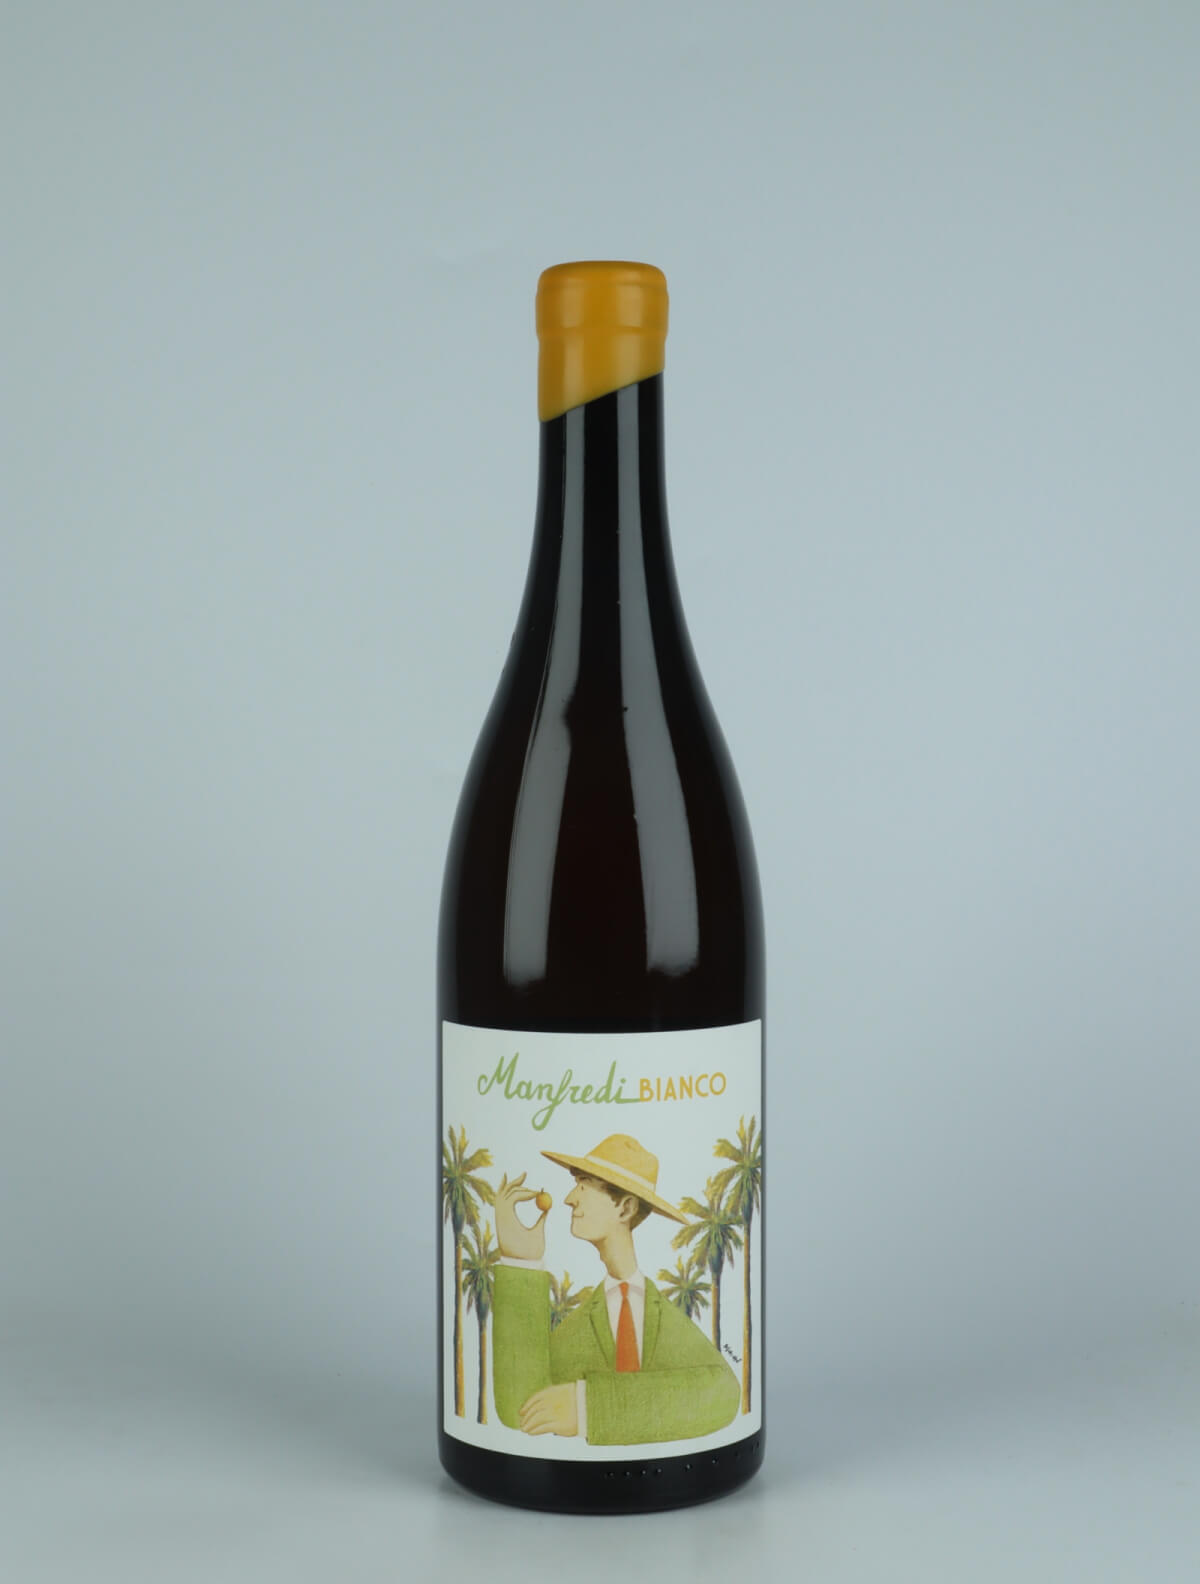 A bottle 2022 Manfredi Bianco White wine from Manfredi Franco, Sicily in Italy